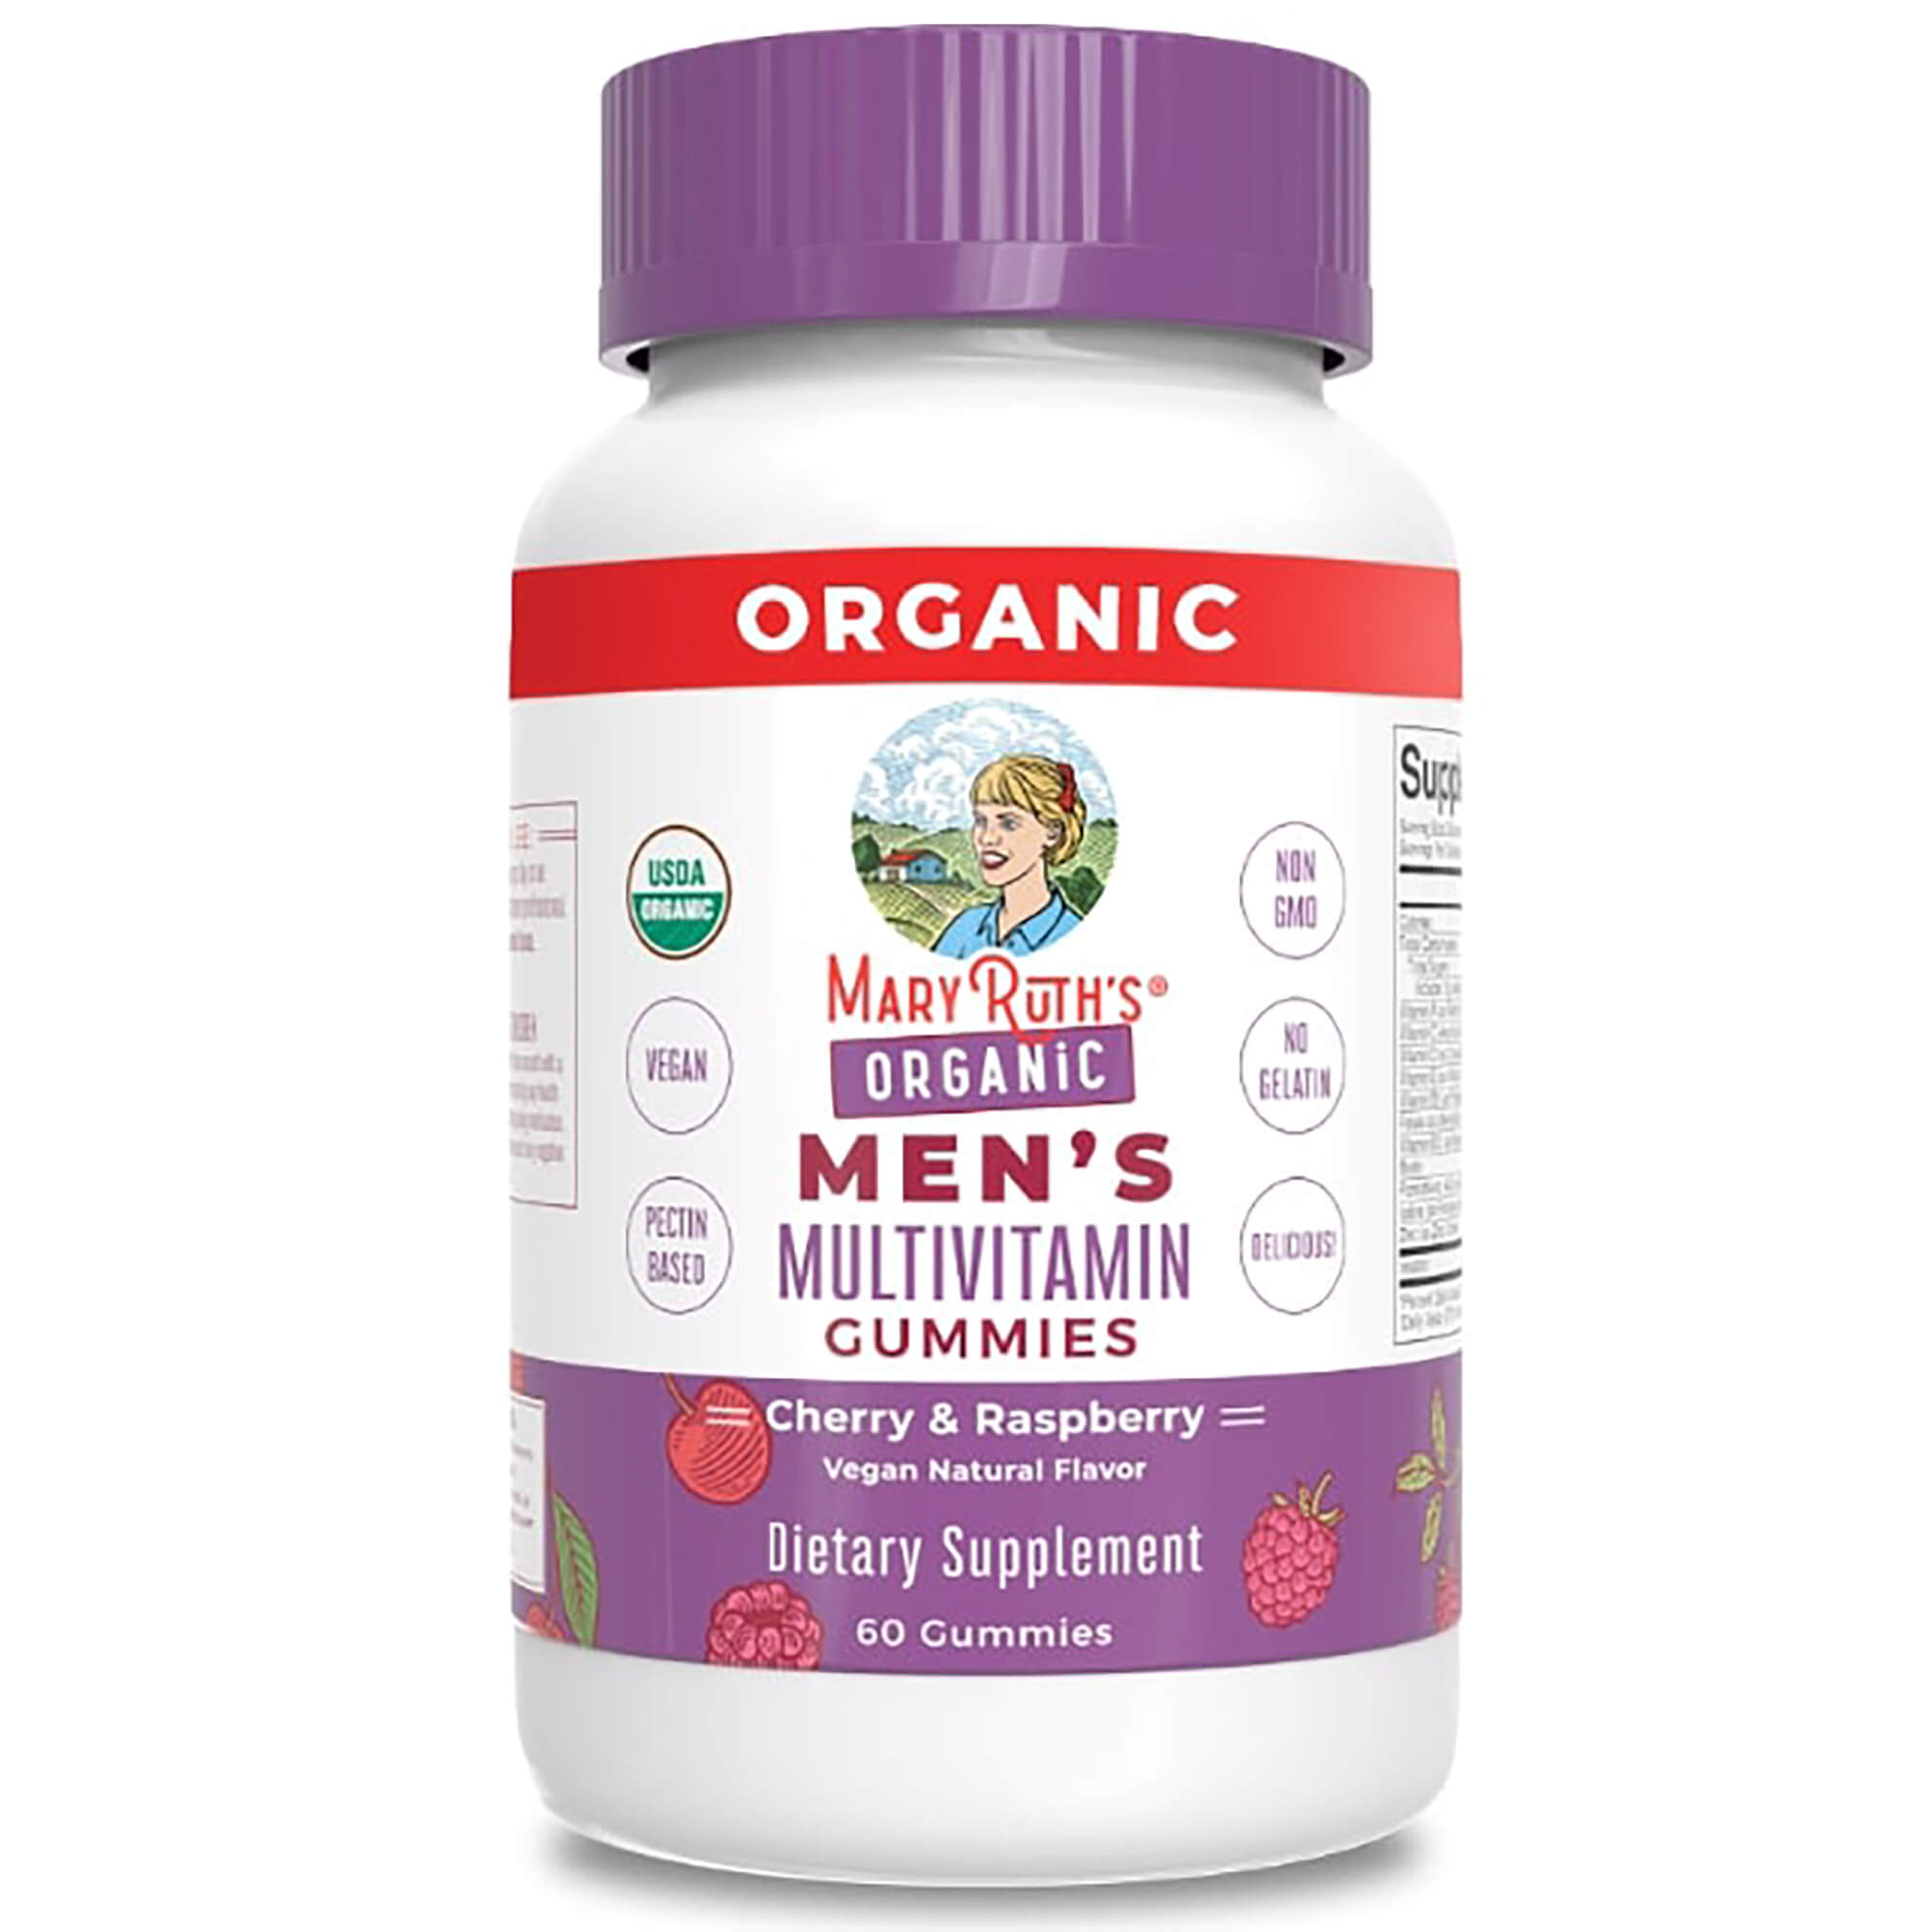 Organic Men’s Multivitamin Gummies